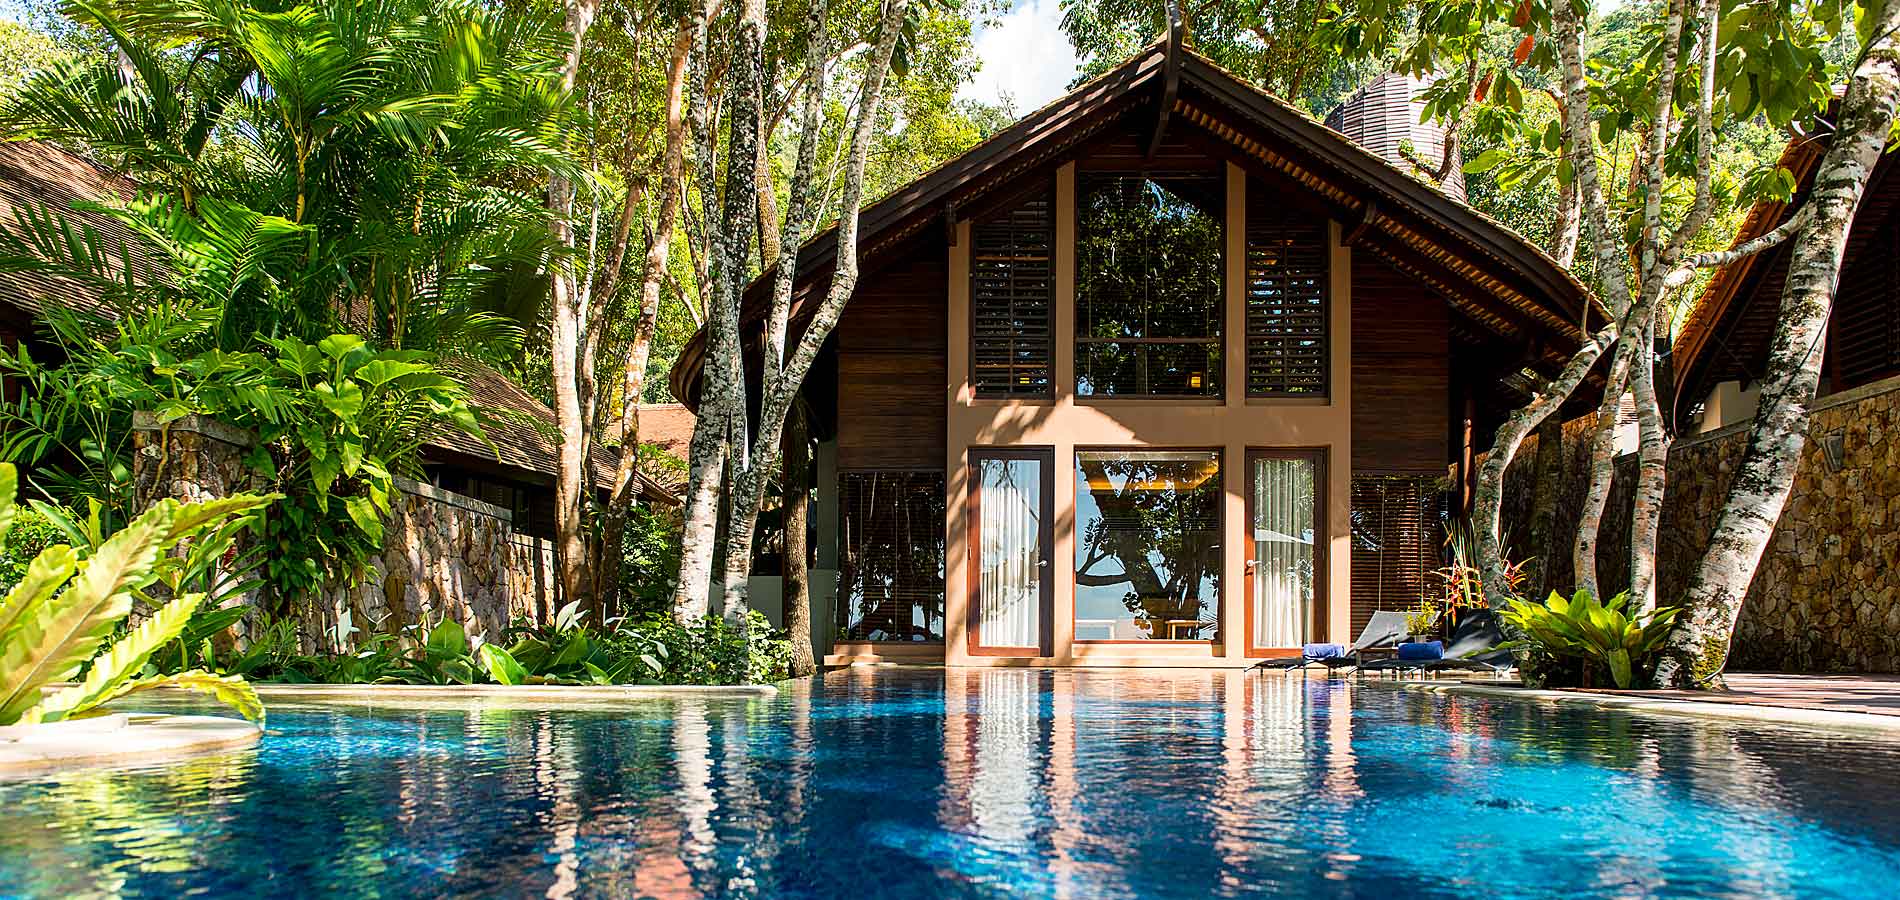 Thailand - Krabi - 18264 - Poolside villa